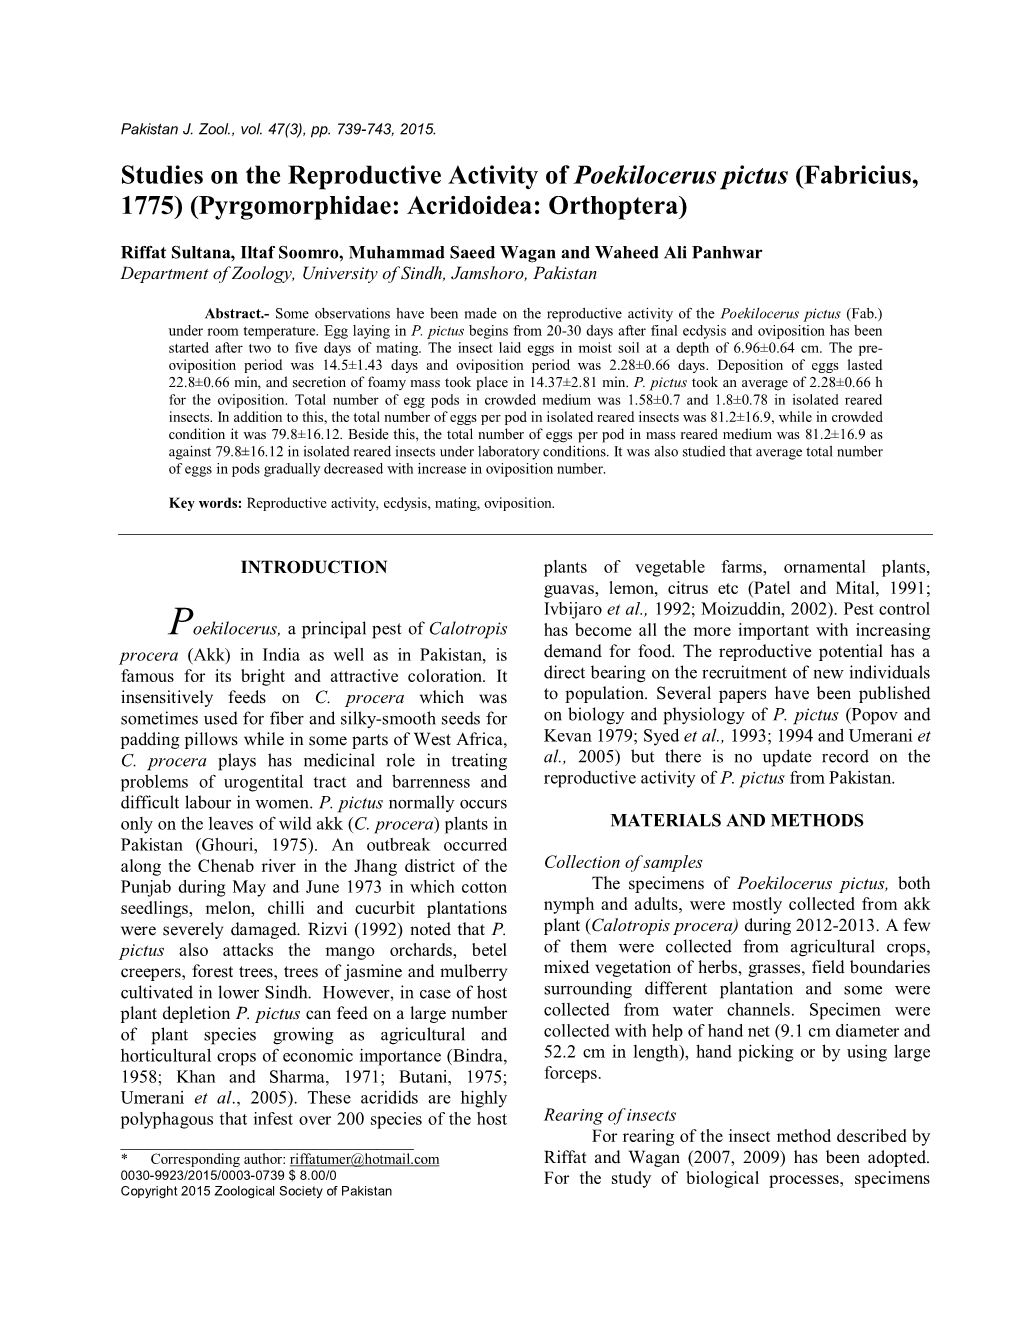 Studies on the Reproductive Activity of Poekilocerus Pictus (Fabricius, 1775) (Pyrgomorphidae: Acridoidea: Orthoptera)